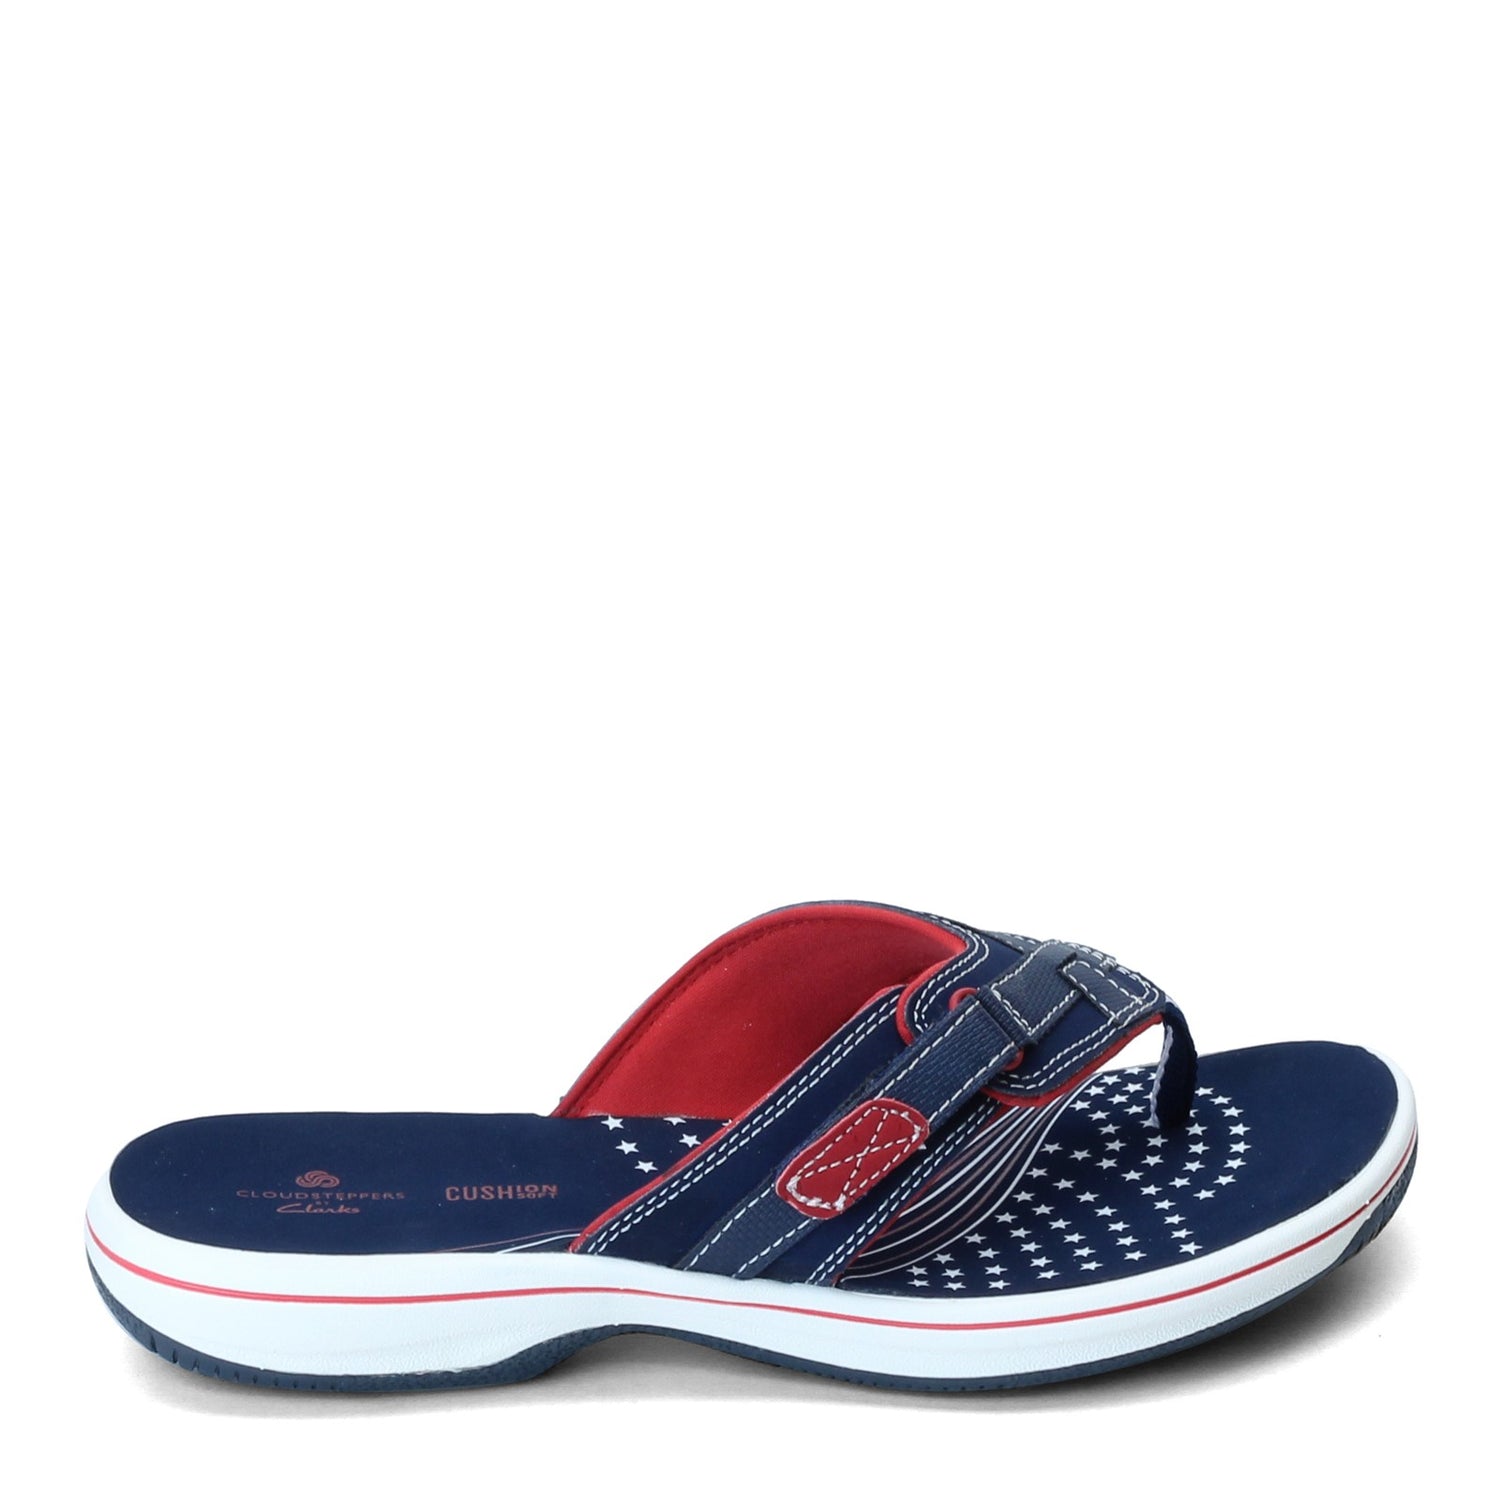 Peltz Shoes  Women's Clarks Breeze Sea Sandal RED WHITE BLUE 26154124